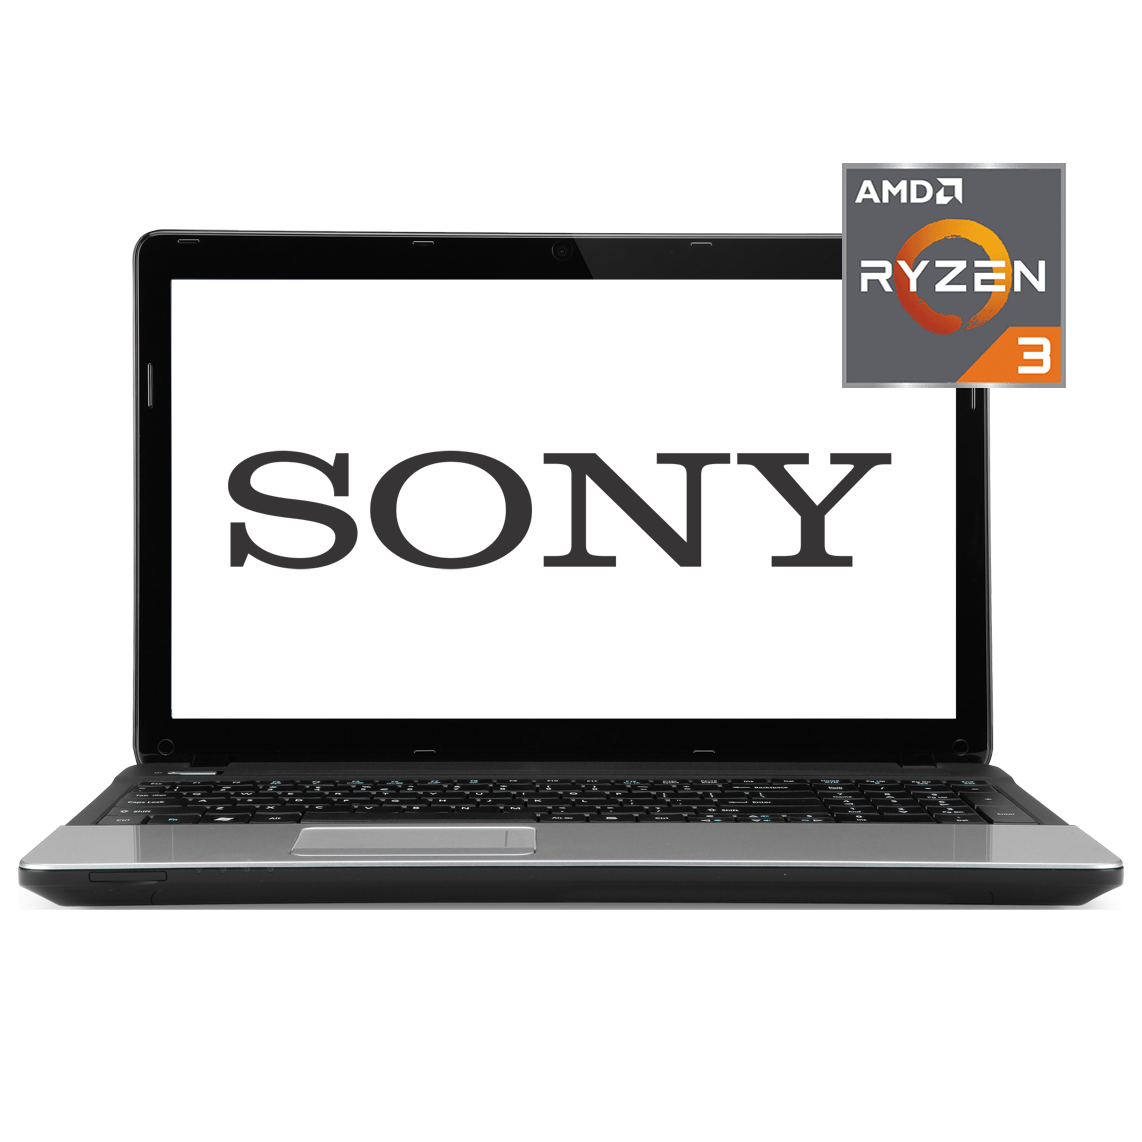 Sony - 13.3 inch AMD Ryzen 3